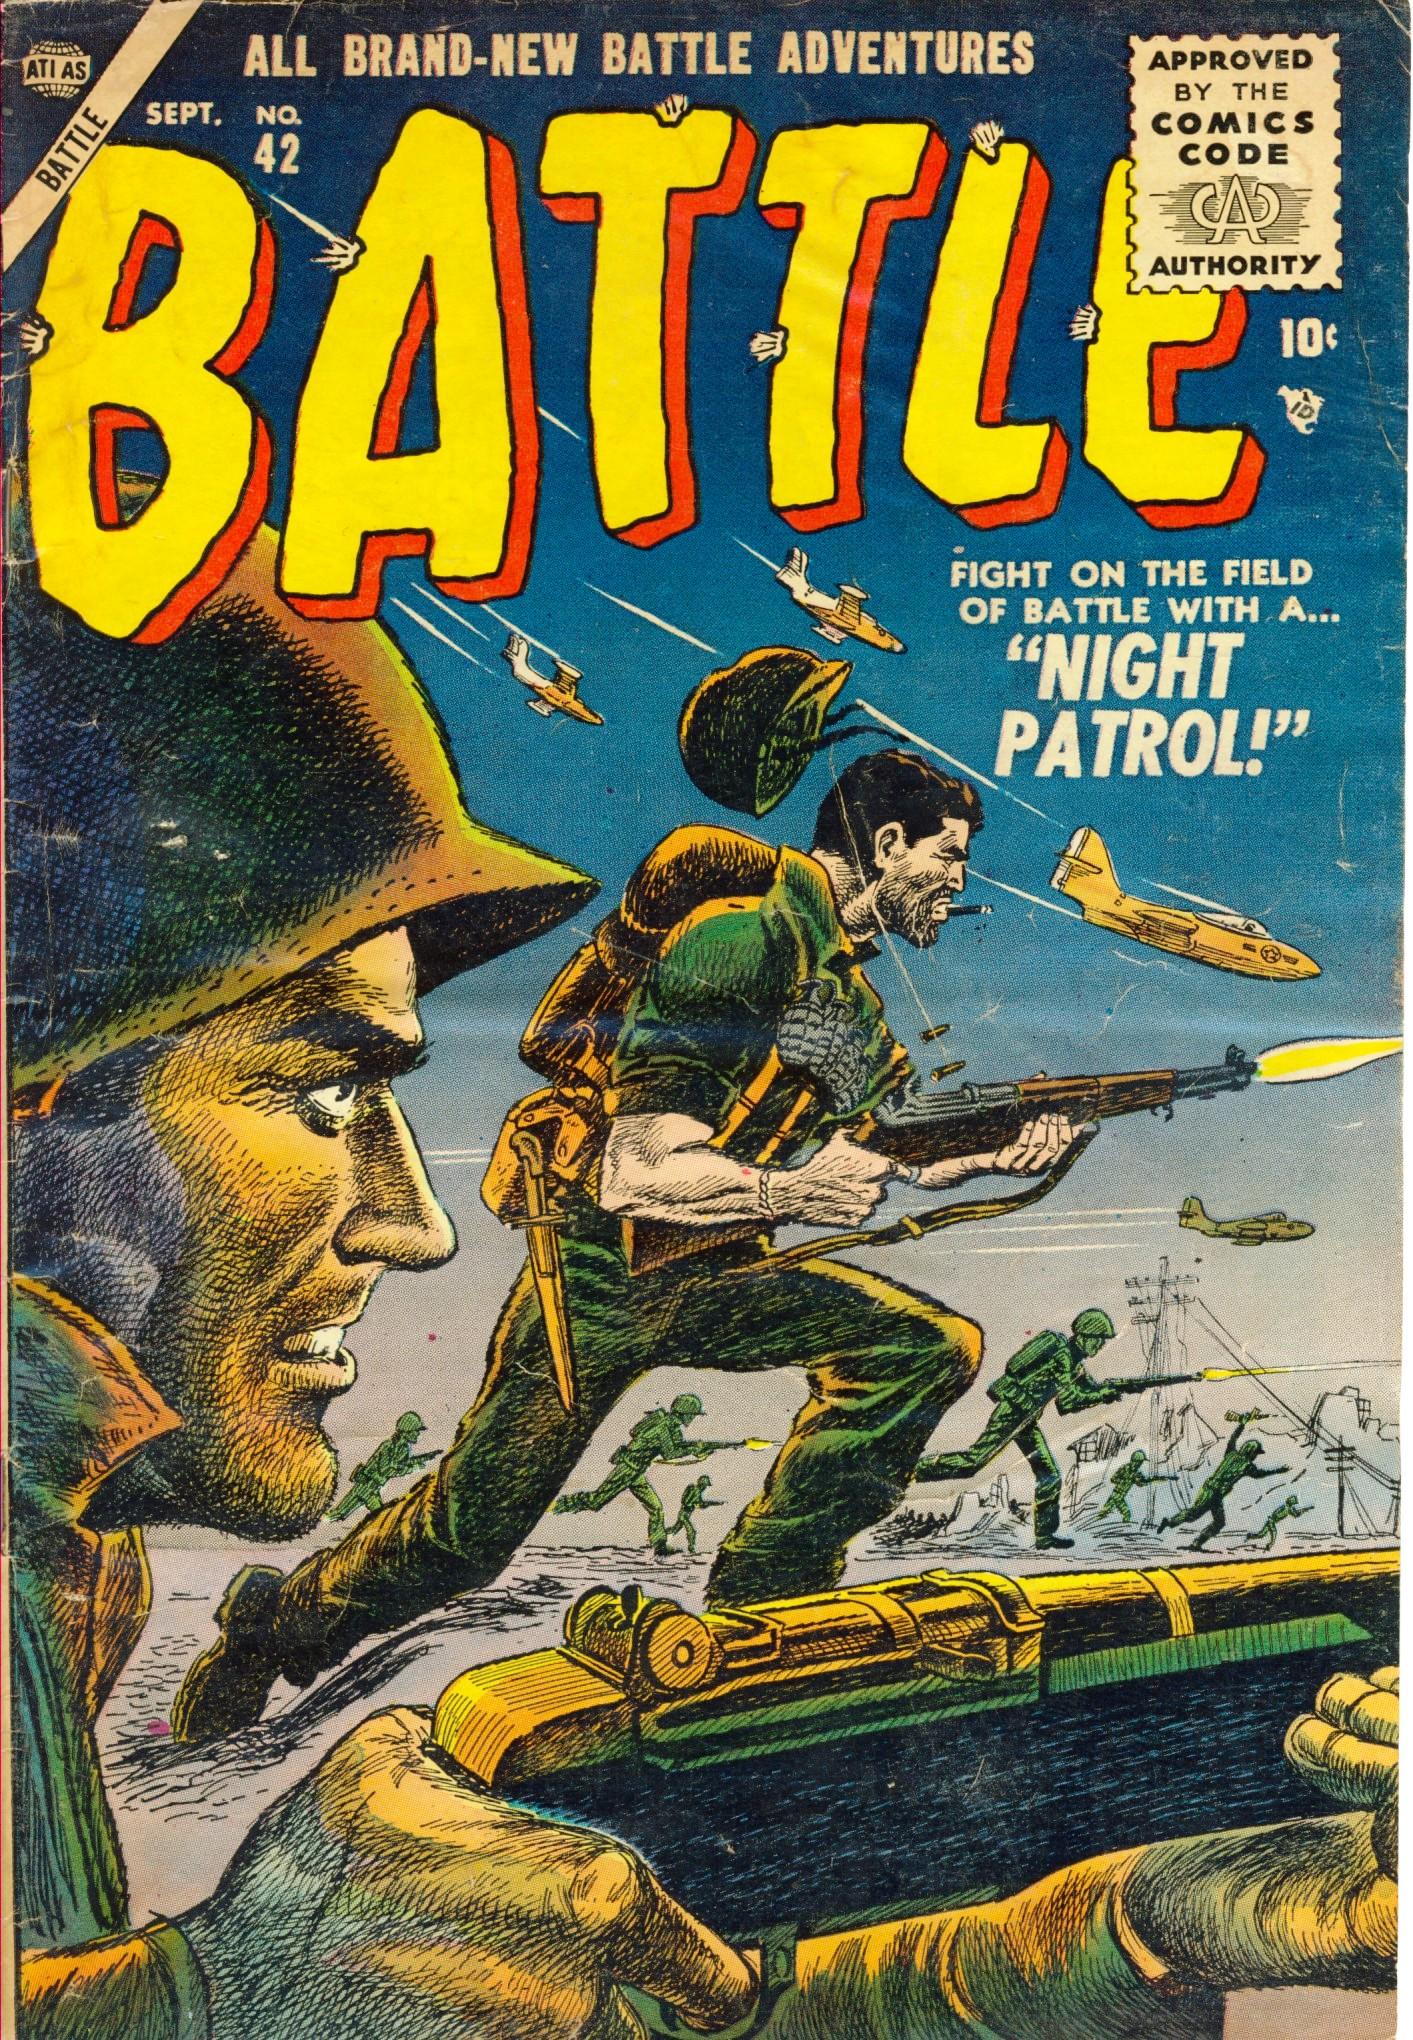 Battle Vol. 1 #42